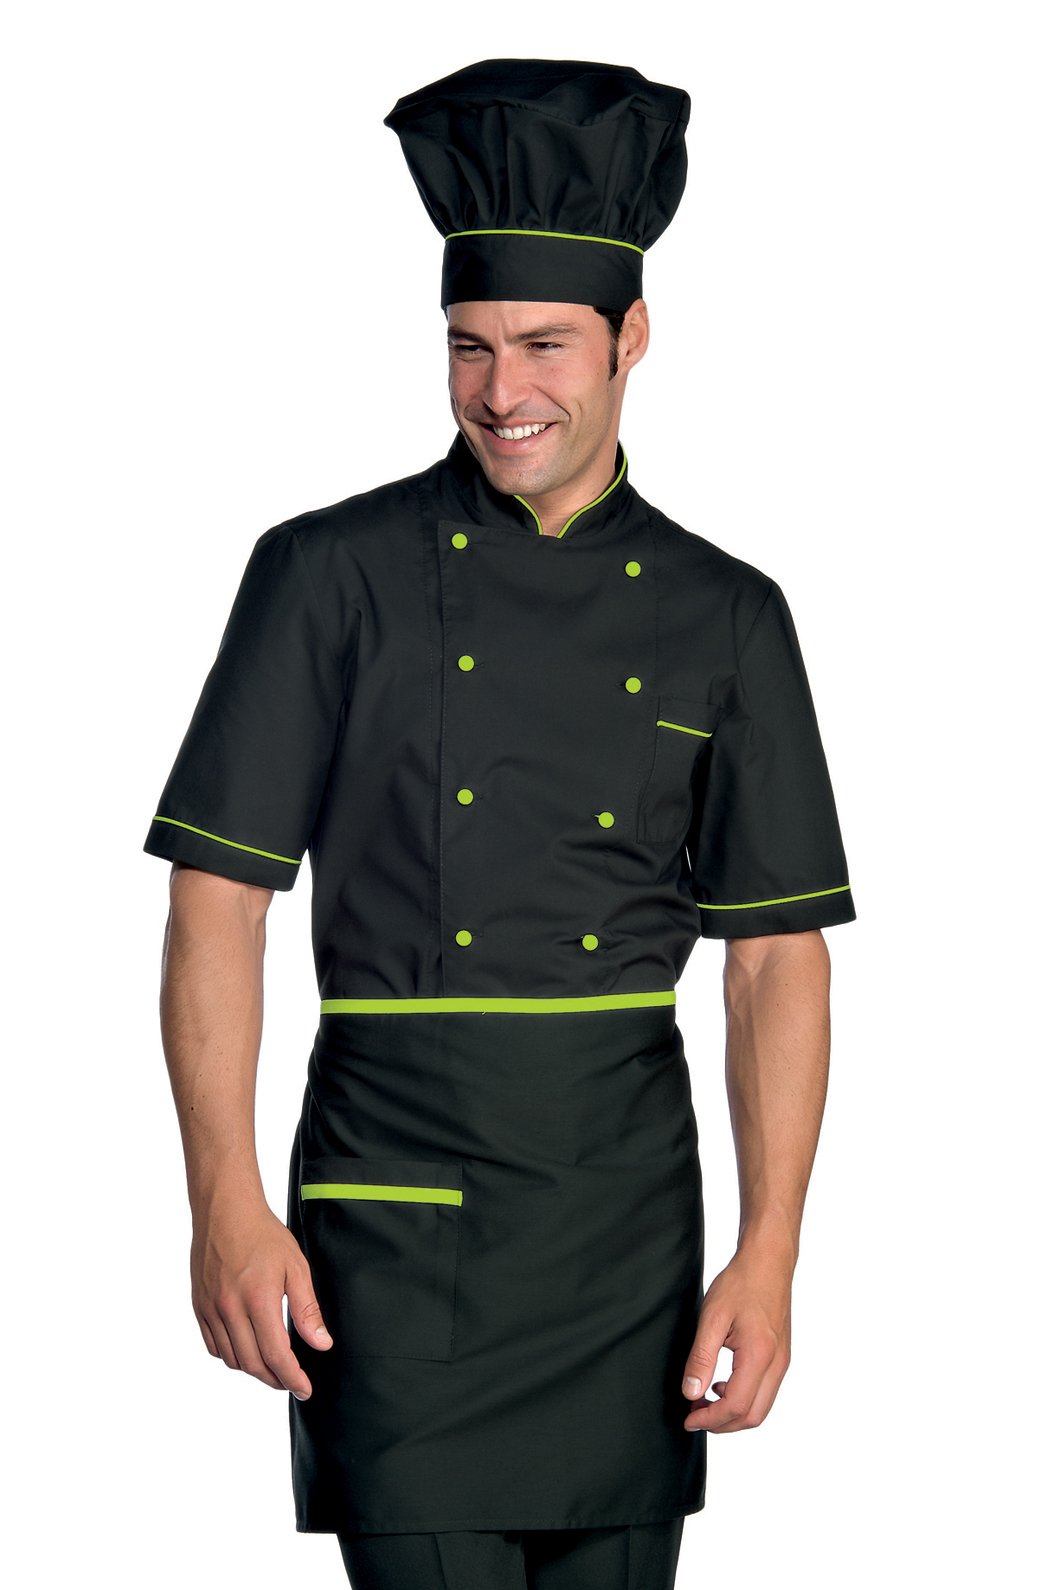 Kochjacke Bäckerjacke Kochbekleidung schwarz grün mit Kochjackenknöpfe Größe XXL